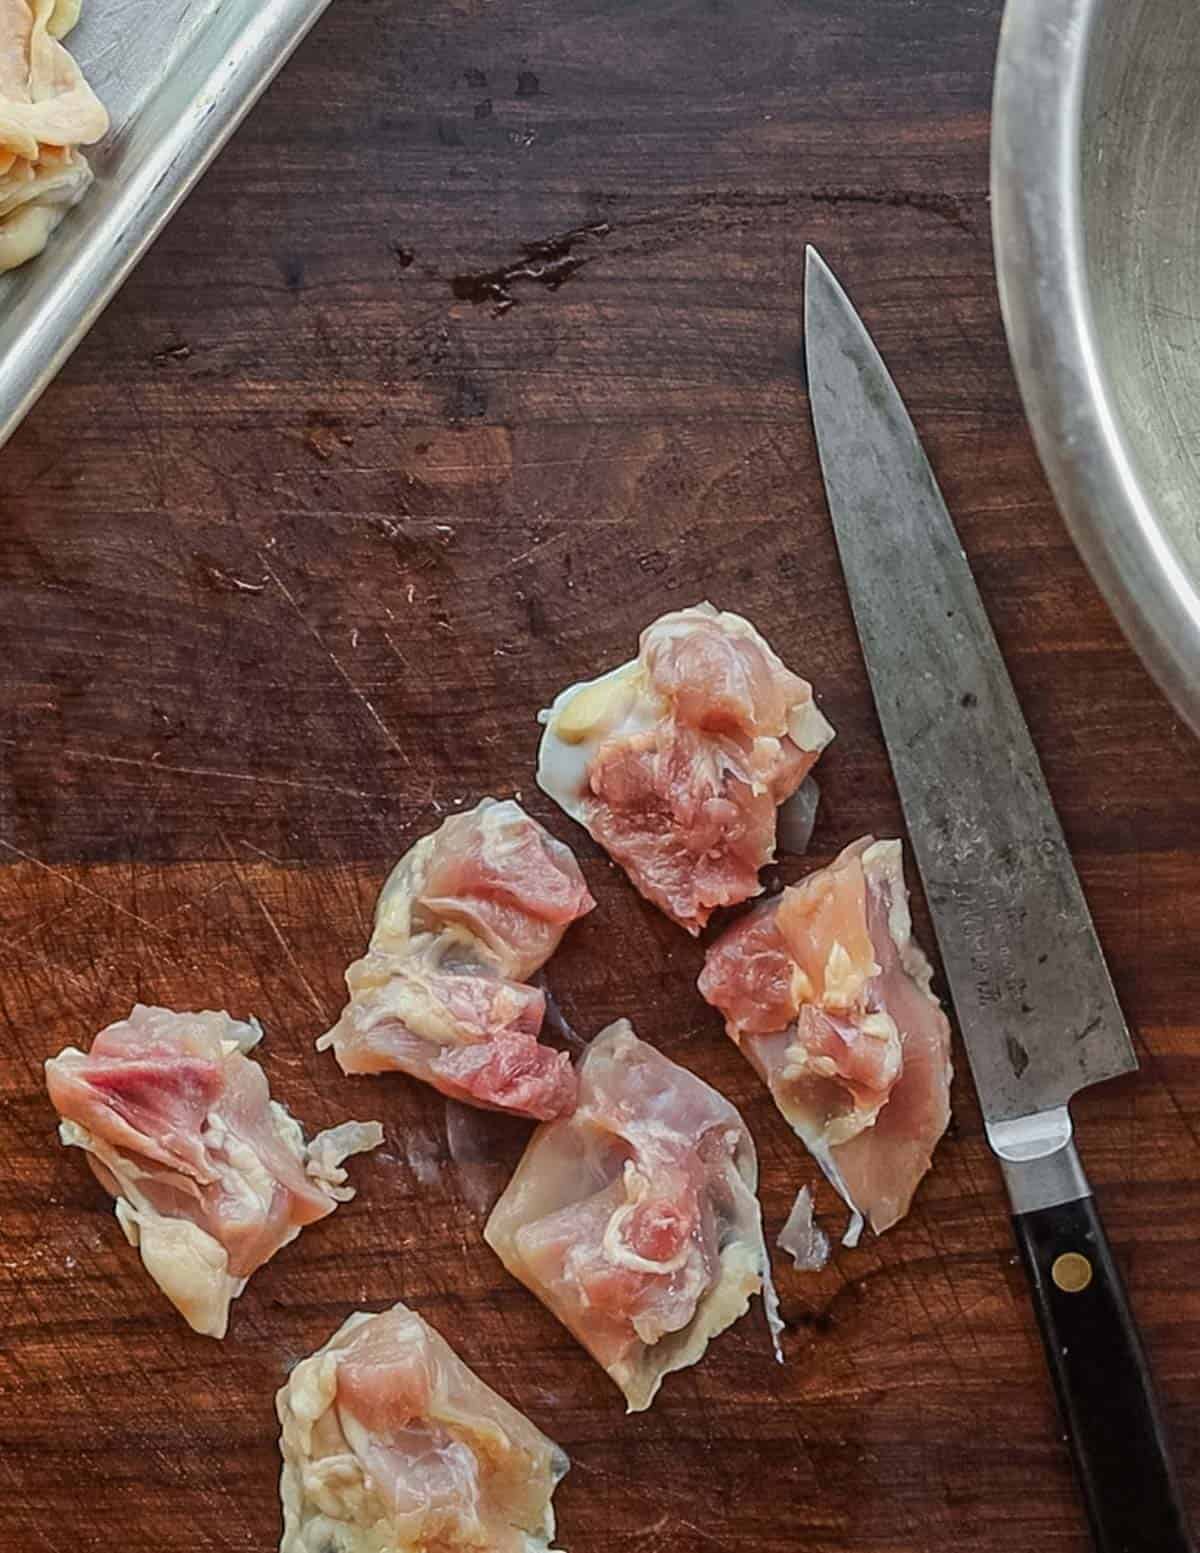 Cutting boneless chicken thighs into pieces. 